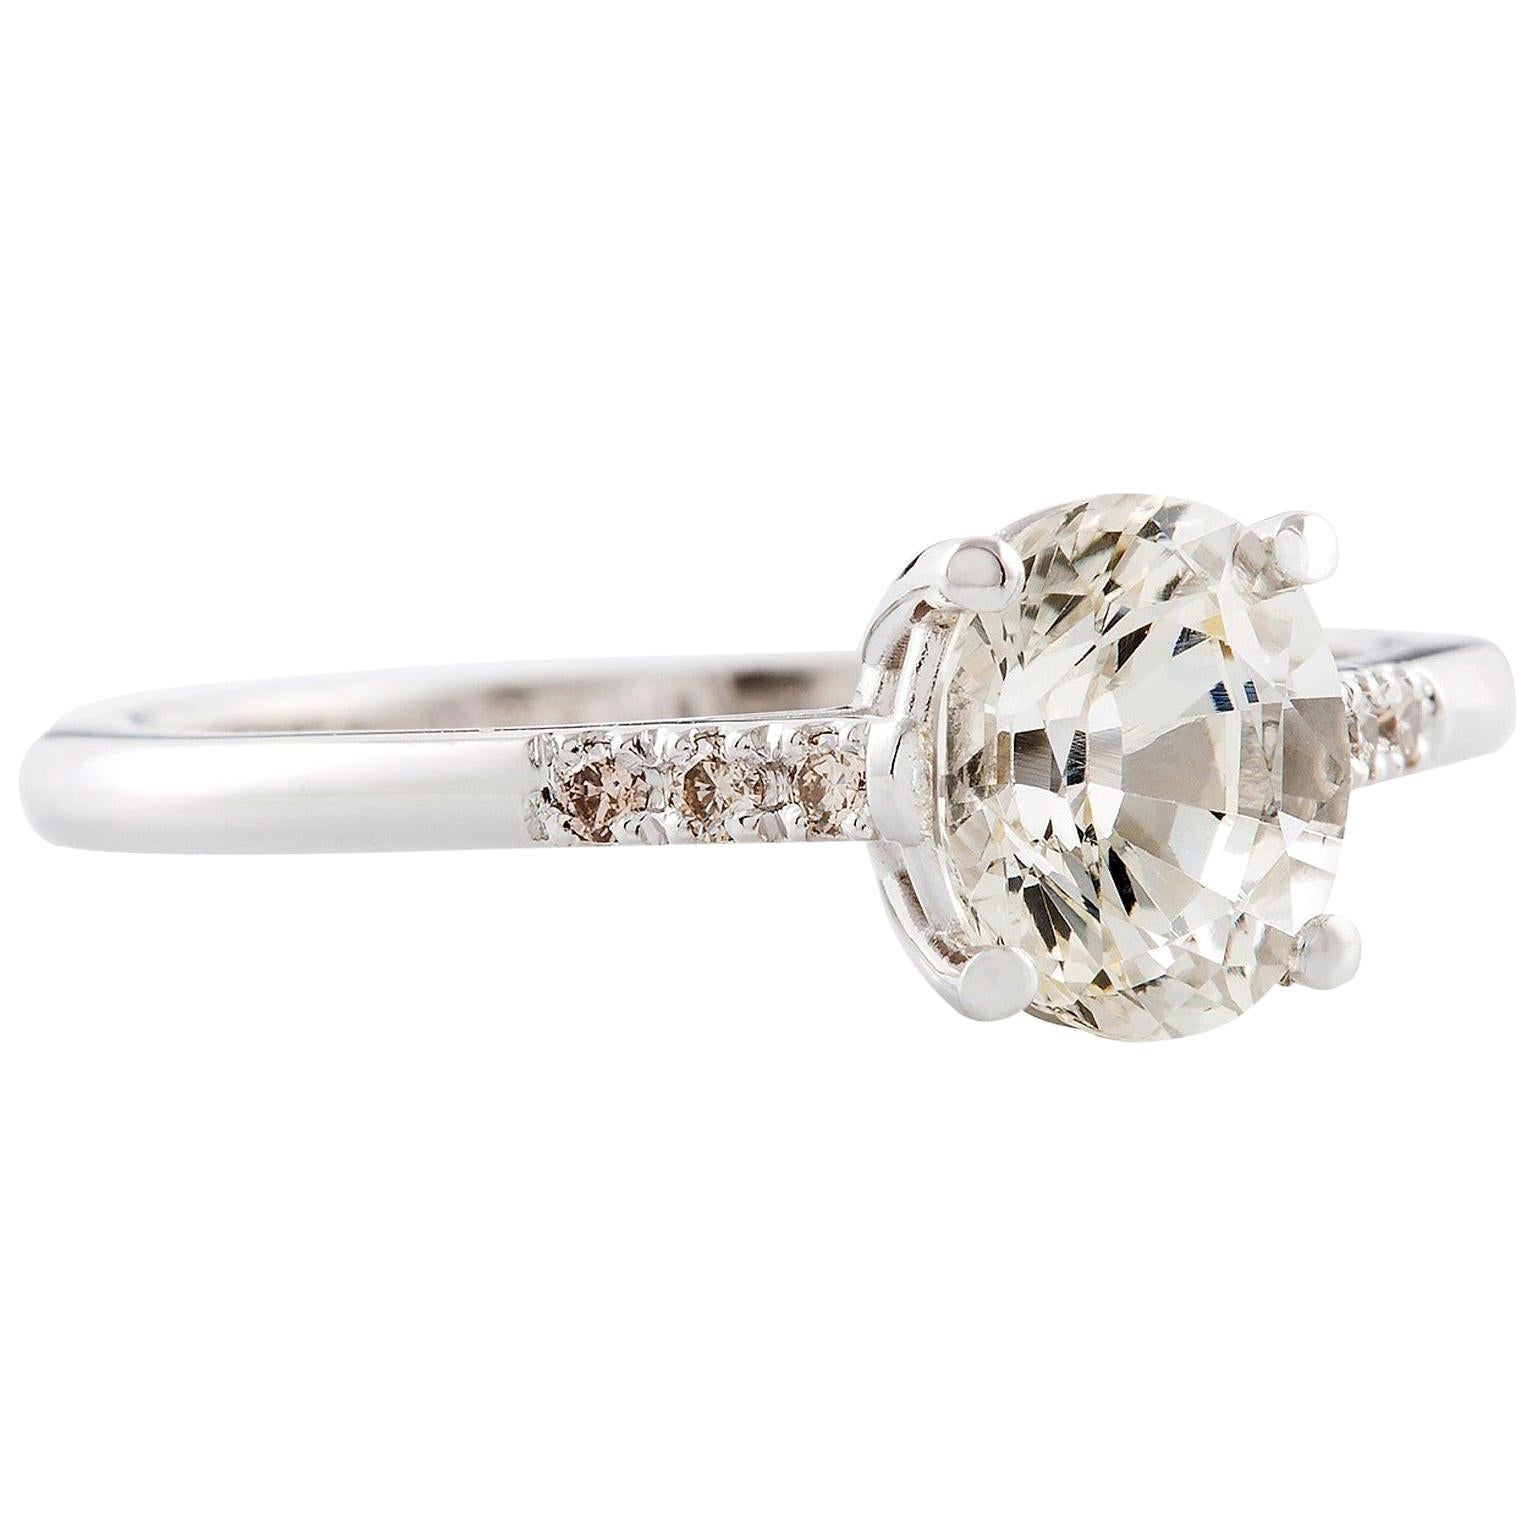 Kian Design 1.54 Carat Oval White Sapphire and Diamond Ring 18 Carat White Gold